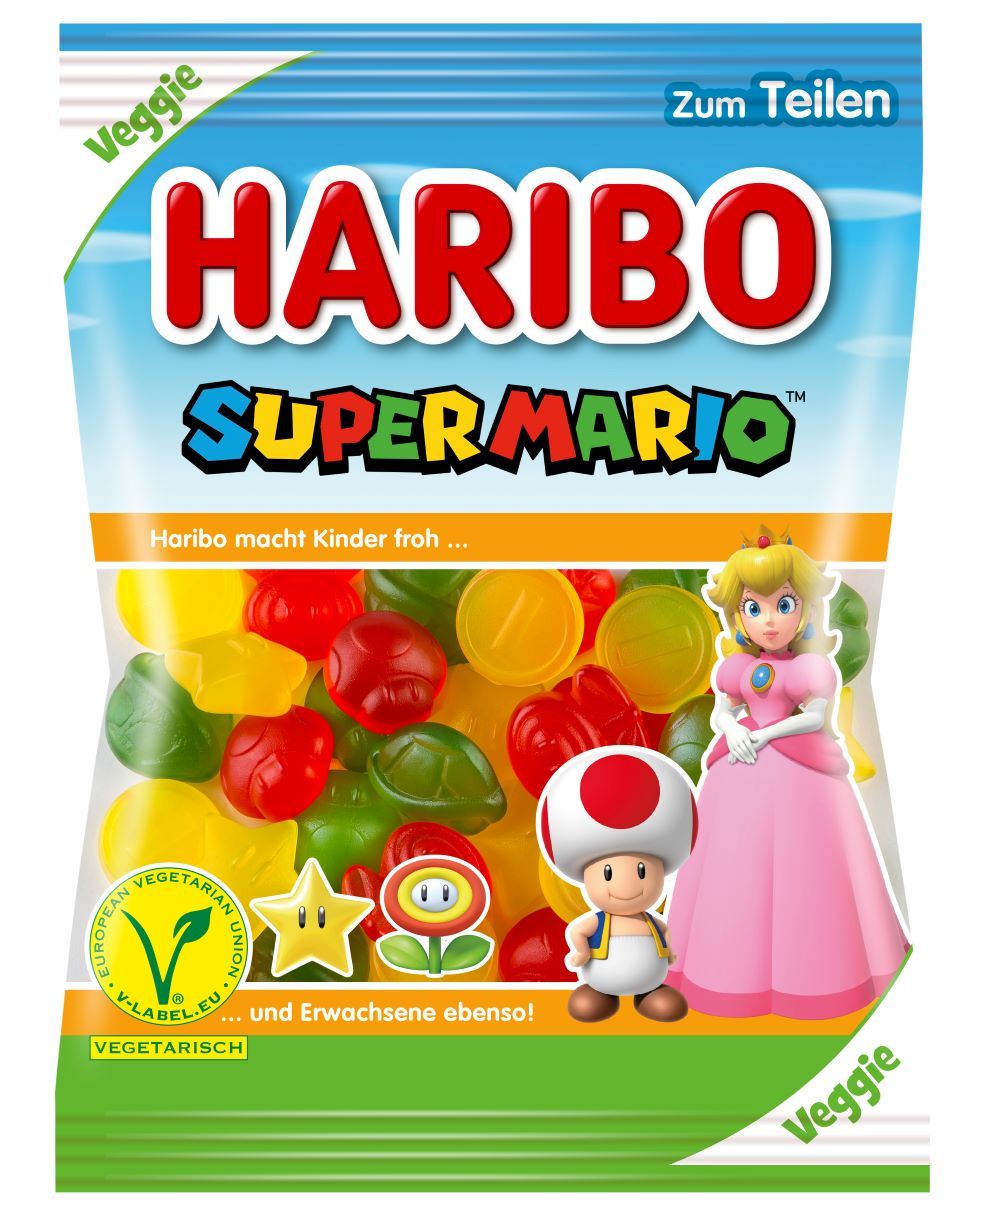 ​Haribo: in arrivo la limited edition Super Mario